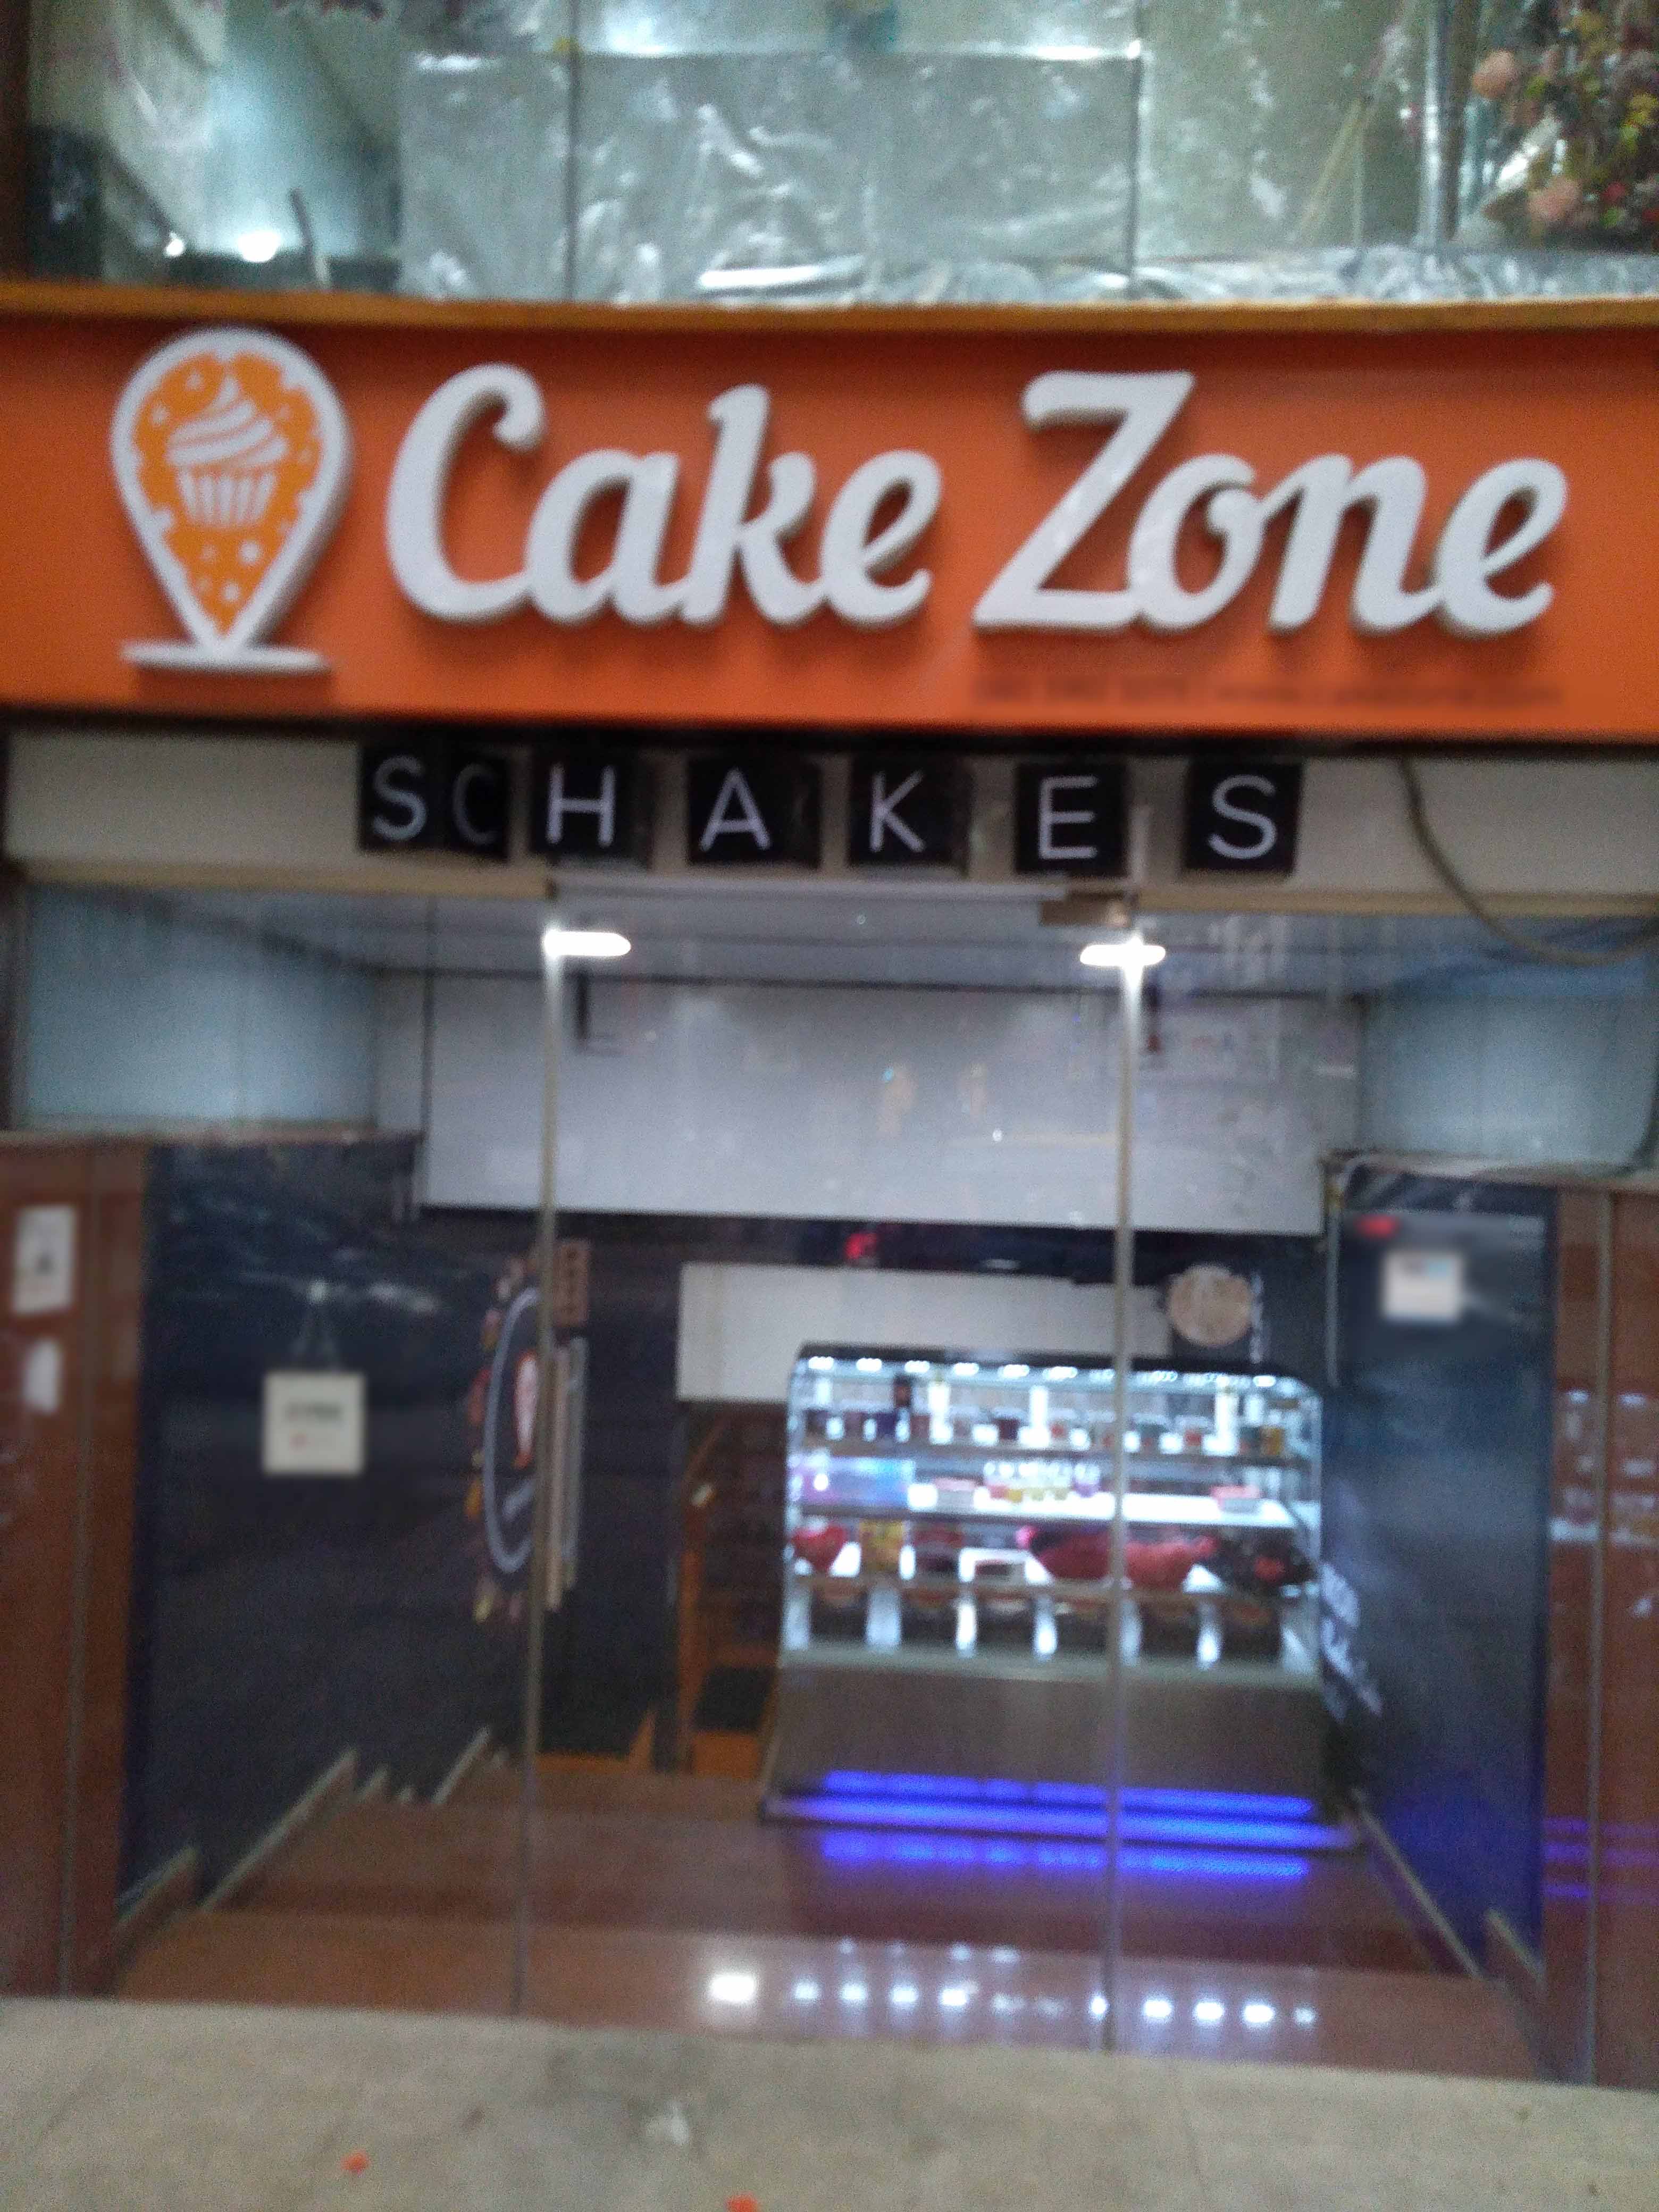 The 10 Best Wedding Cakes Shops in Banashankari - Weddingwire.in